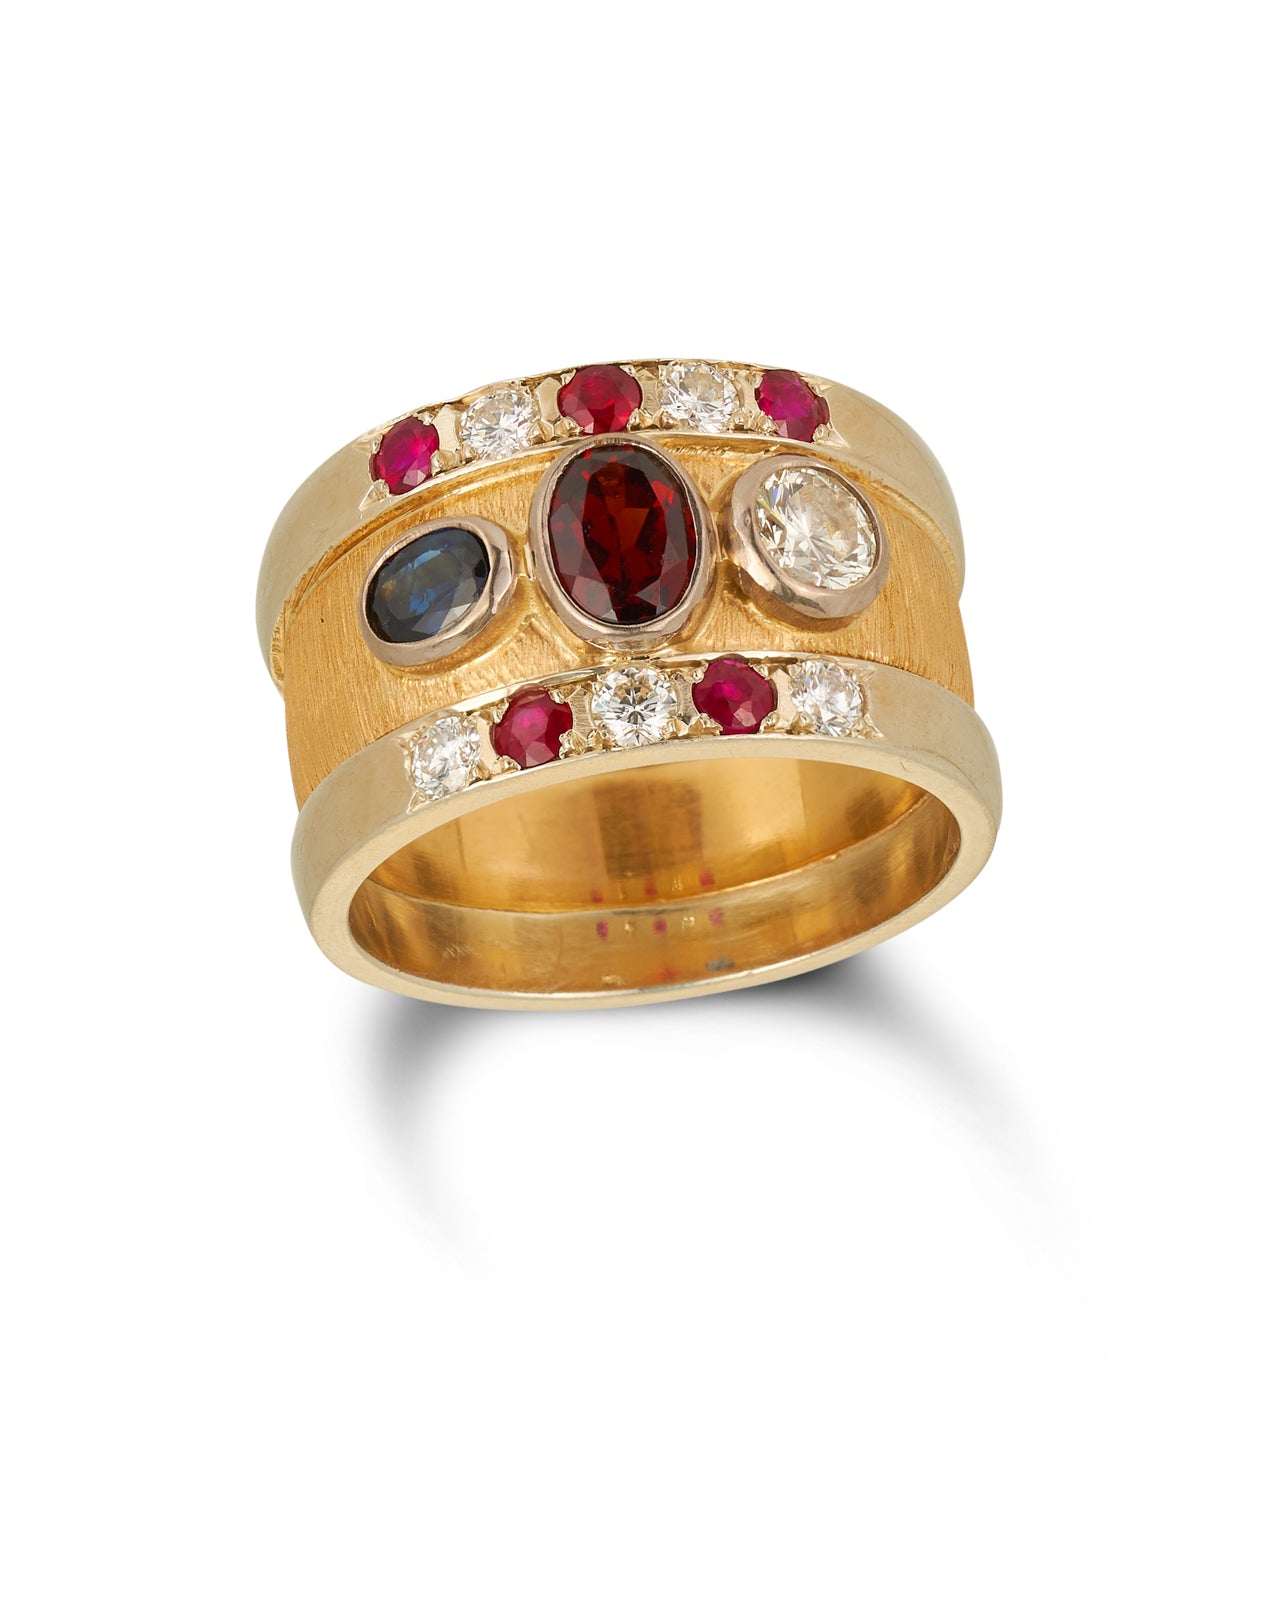 Gentleman's diamond, ruby, sapphire and garnet dress ring